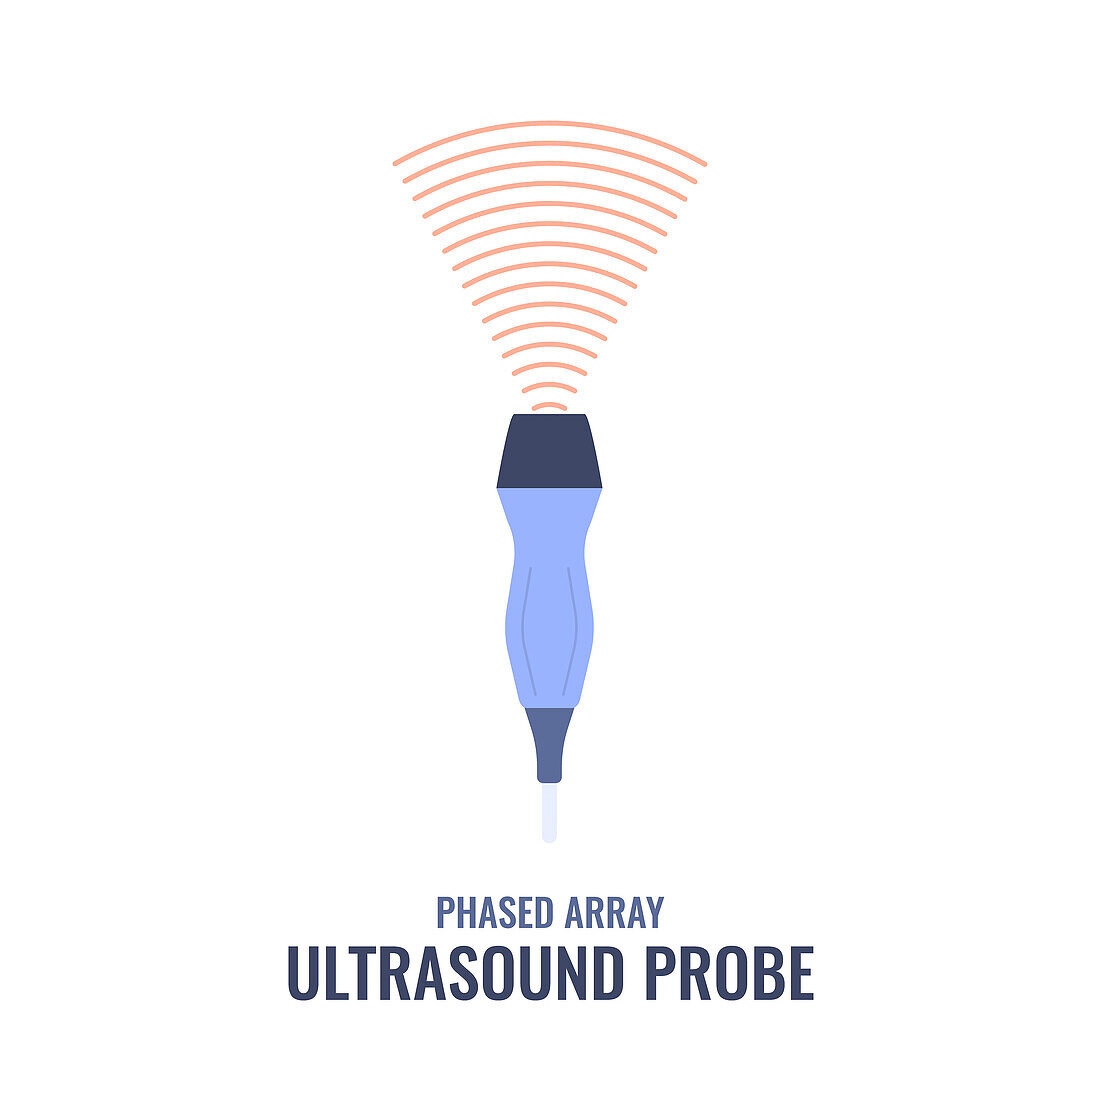 Phased array ultrasound probe, illustration